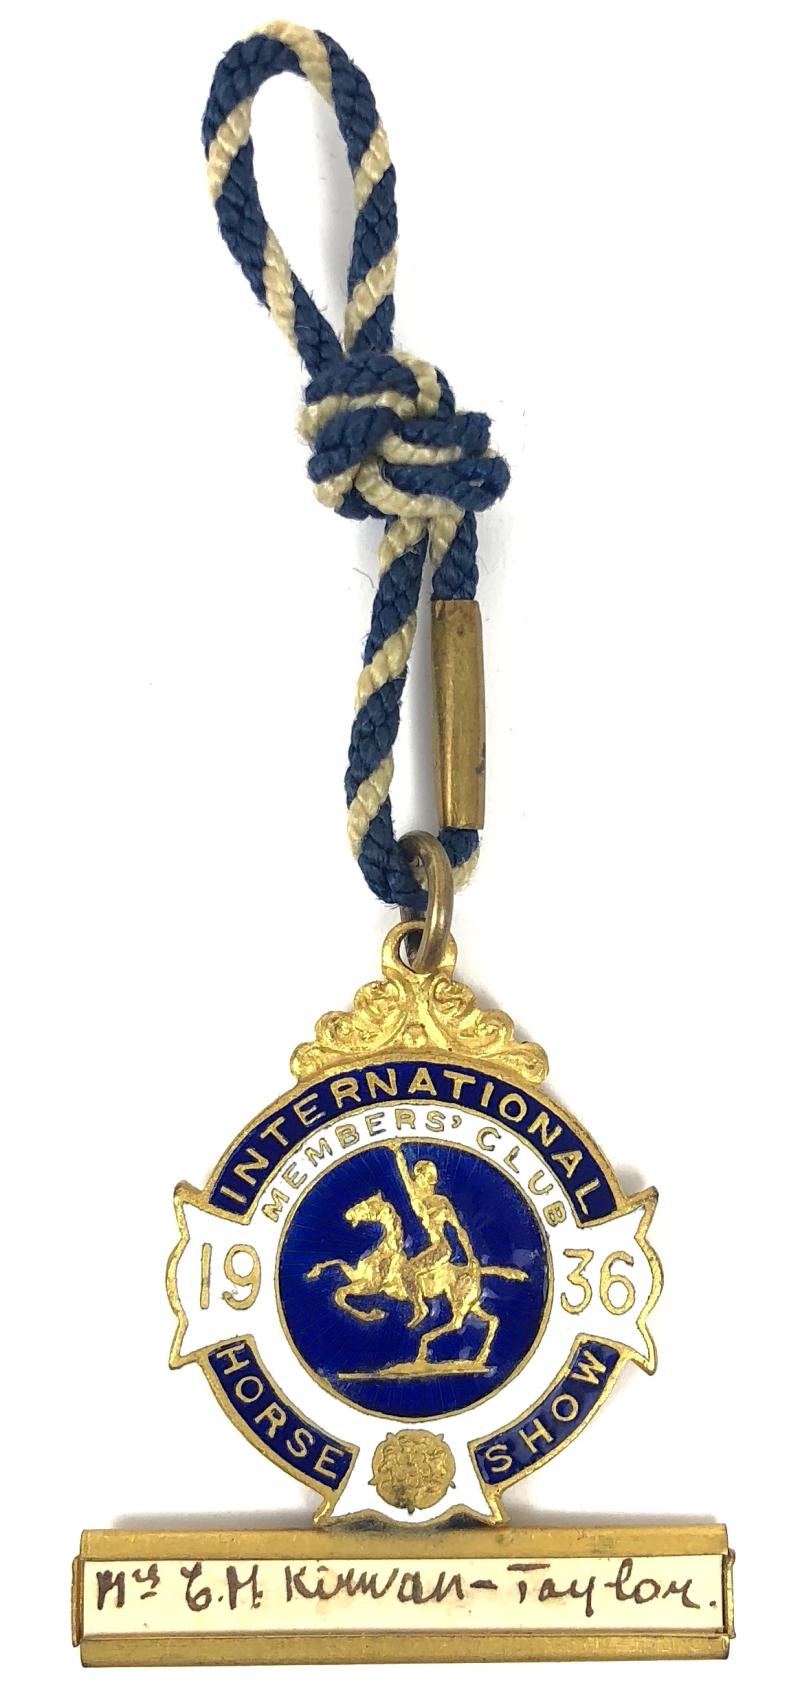 1936 International Horse Show Members Club badge